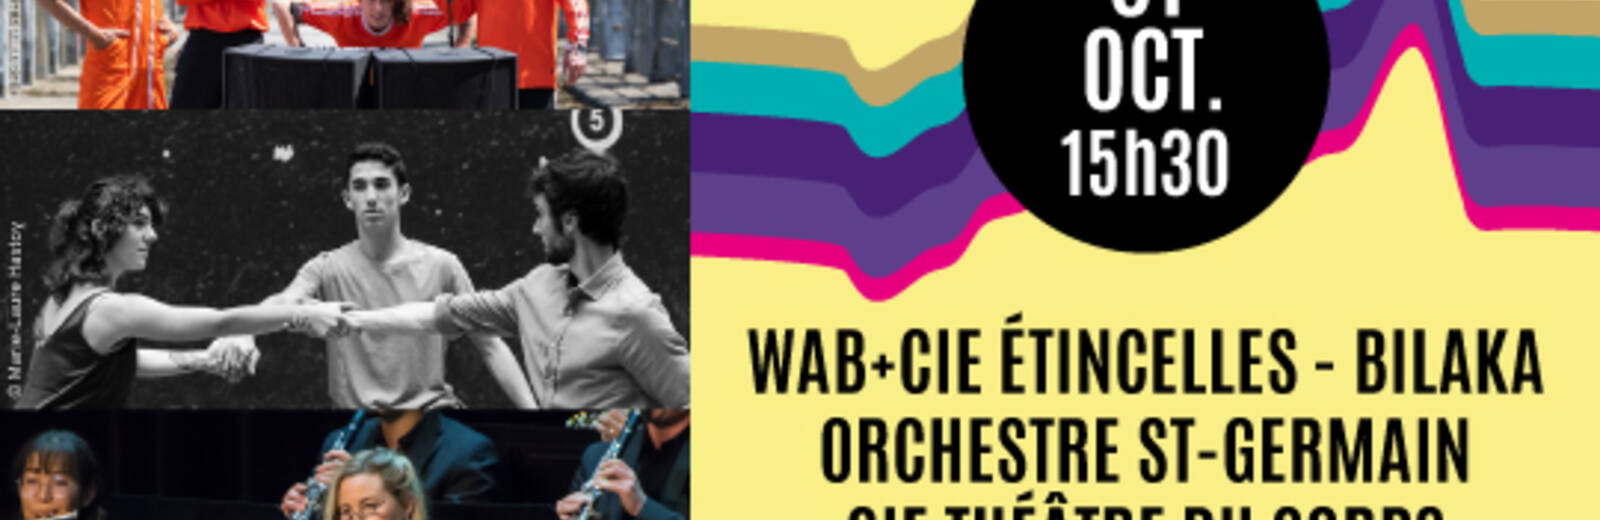 Wab, Cie Étincelles - Street soul train + Bilaka Soka + Orchestre Saint Germain et Théâtre du Corps